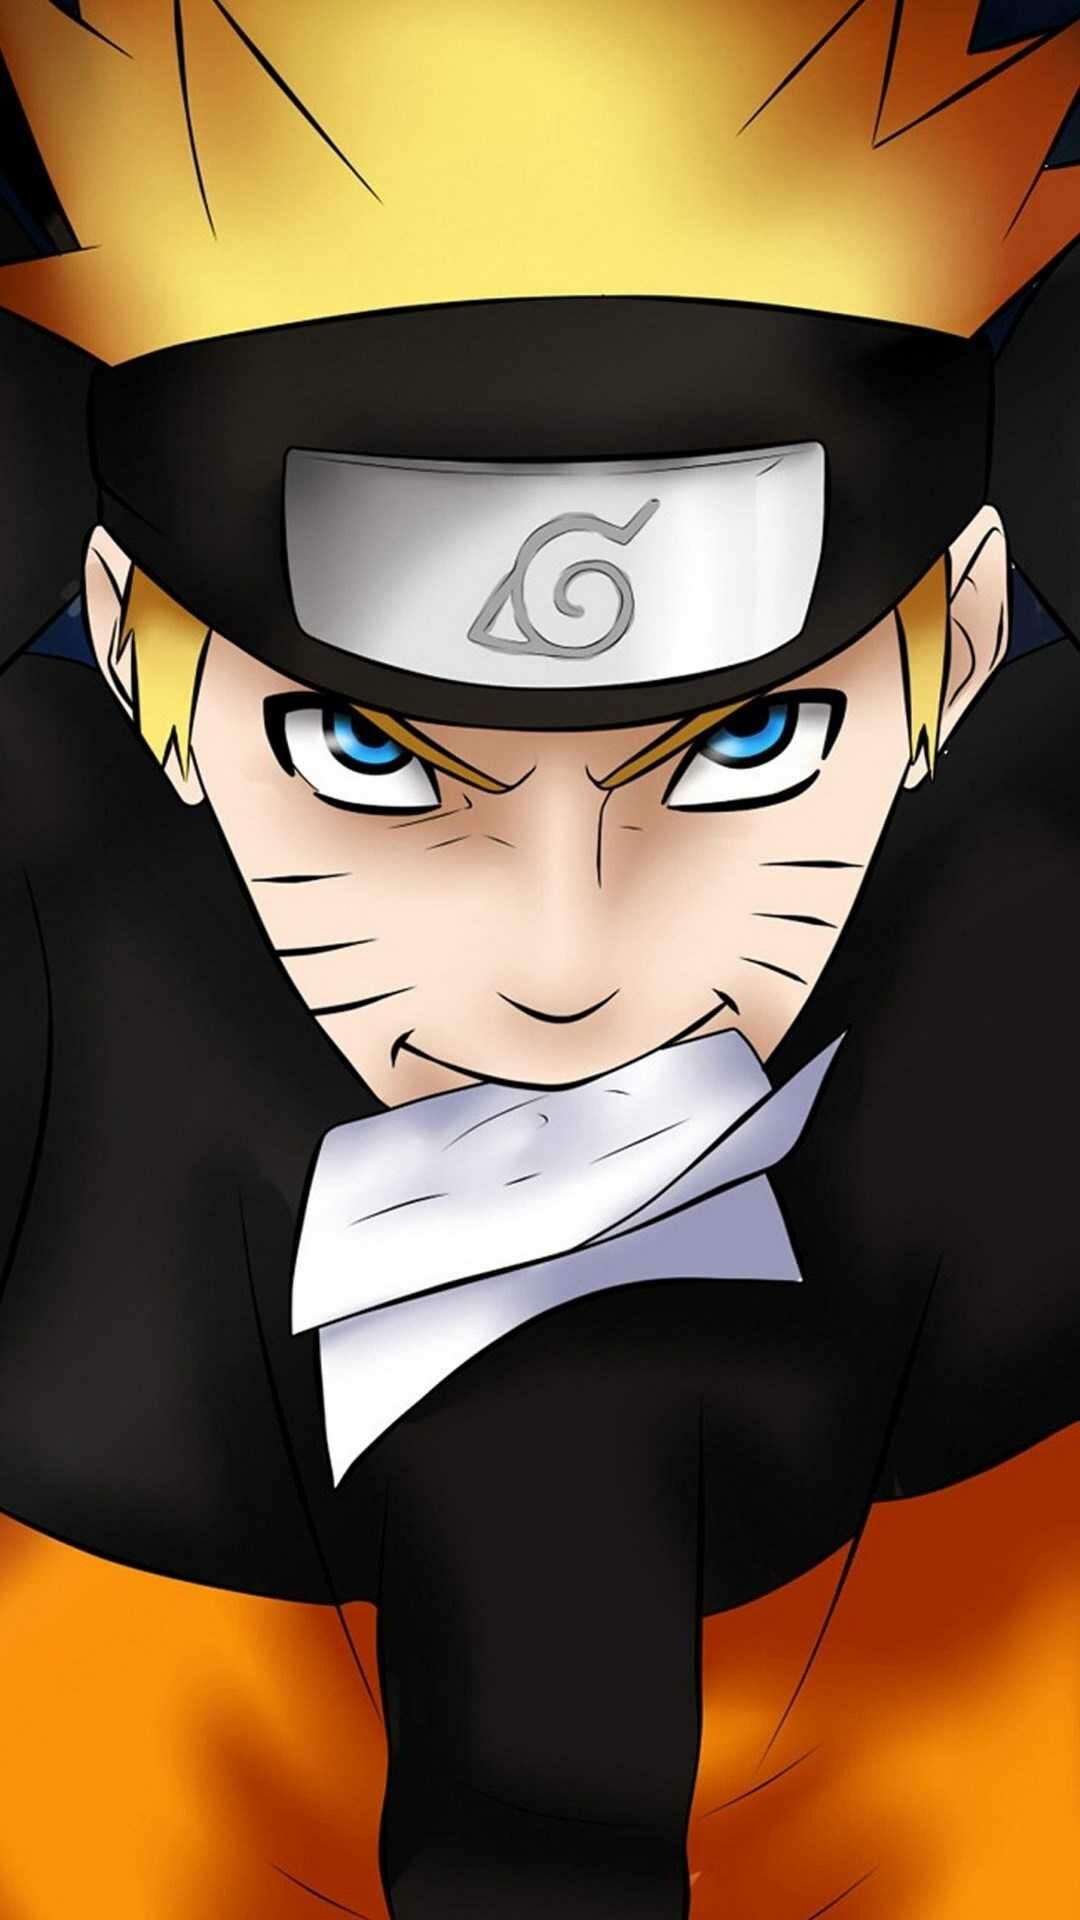 Naruto: Animated film based on a manga series, Ninja. 1080x1920 Full HD Wallpaper.